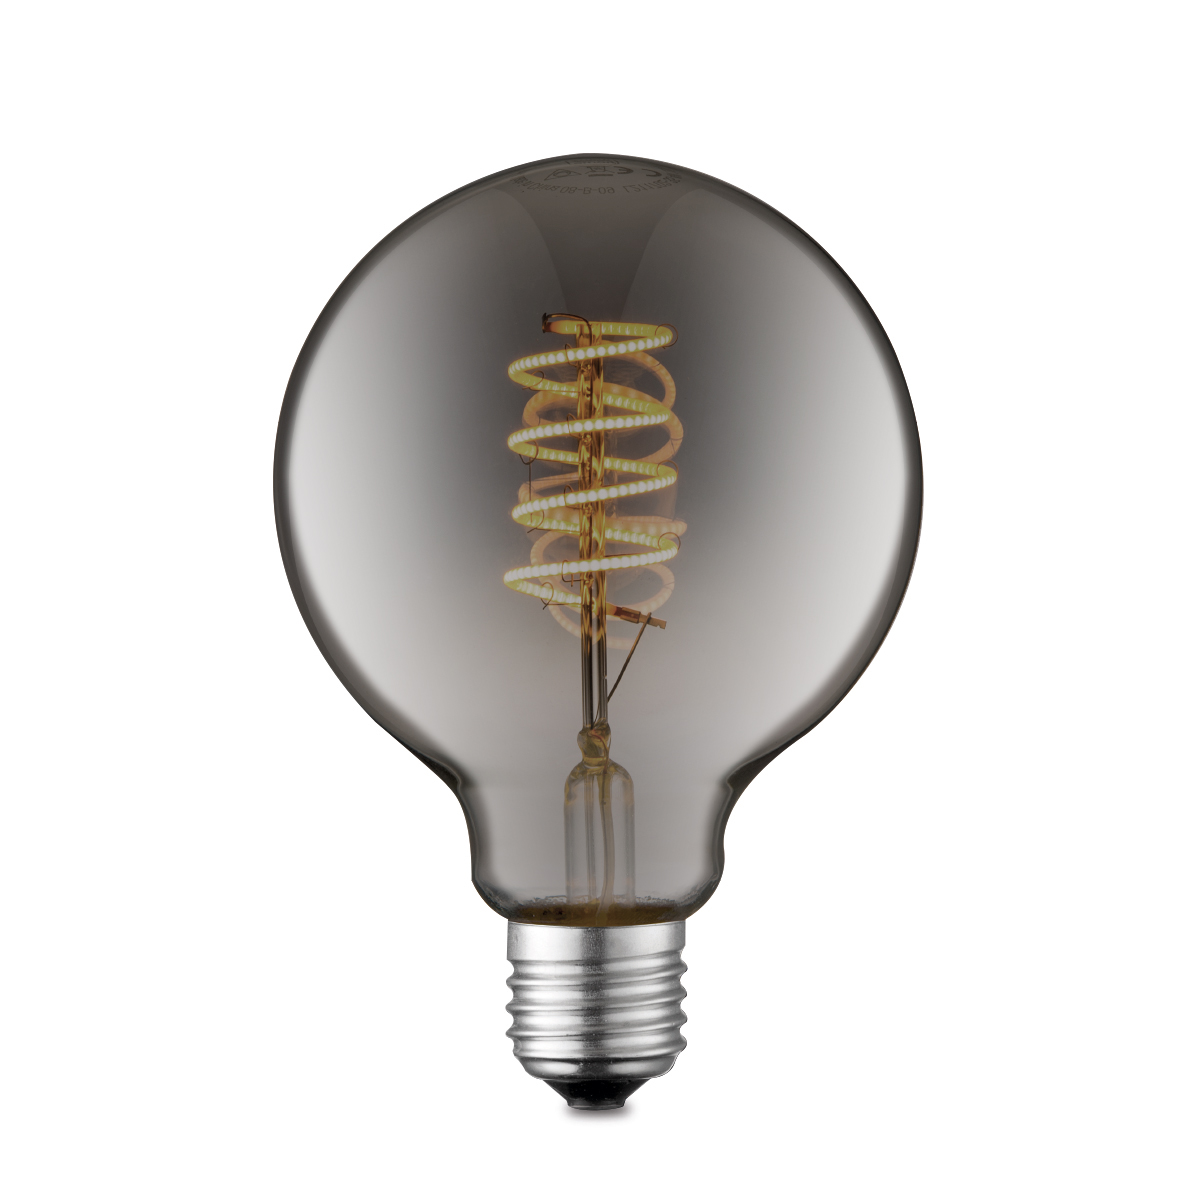 Tangla lighting - TLB-8009-04TM - LED Light Bulb Double Spiral filament - G125 4W titanium - dimmable - E27